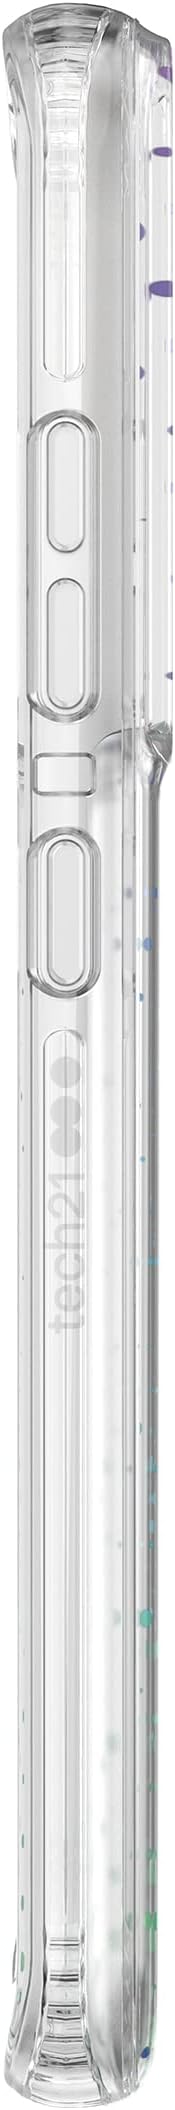 Tech21 Evo Sparkle Samsung Galaxy S21 Ultra Sparkle